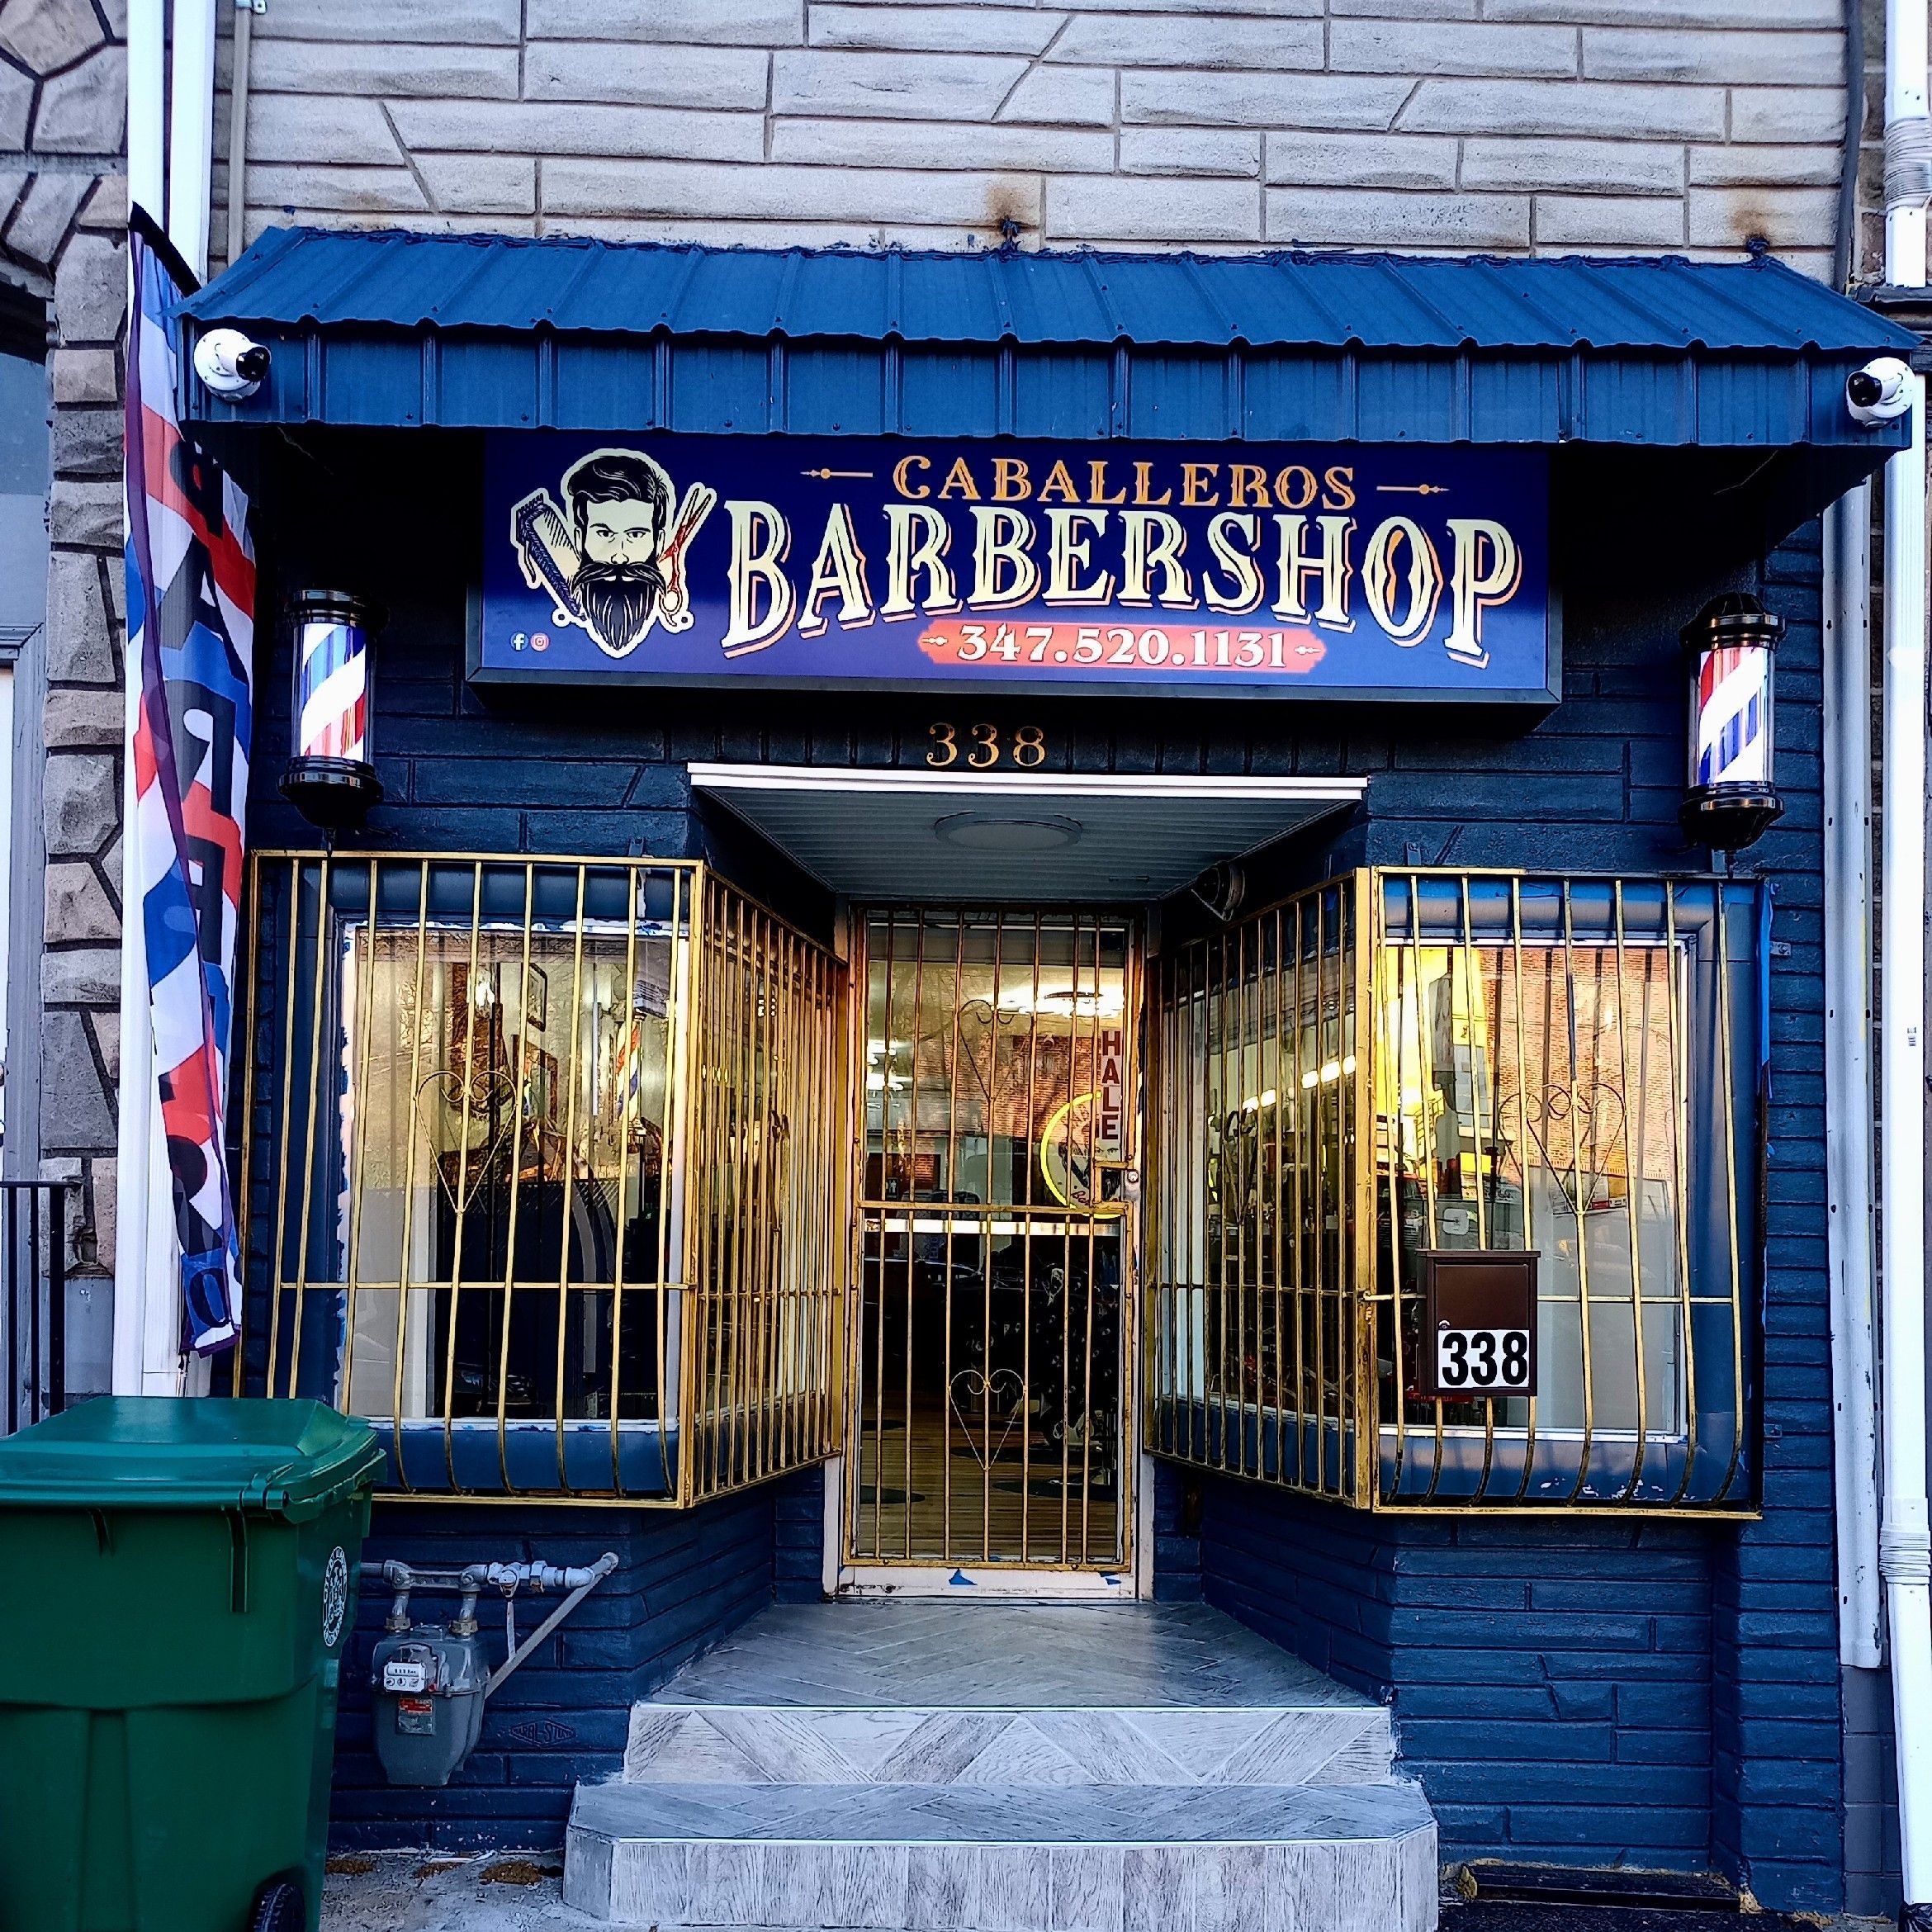 Caballeros Barbershop, 338 N 9th St, Reading, 19601